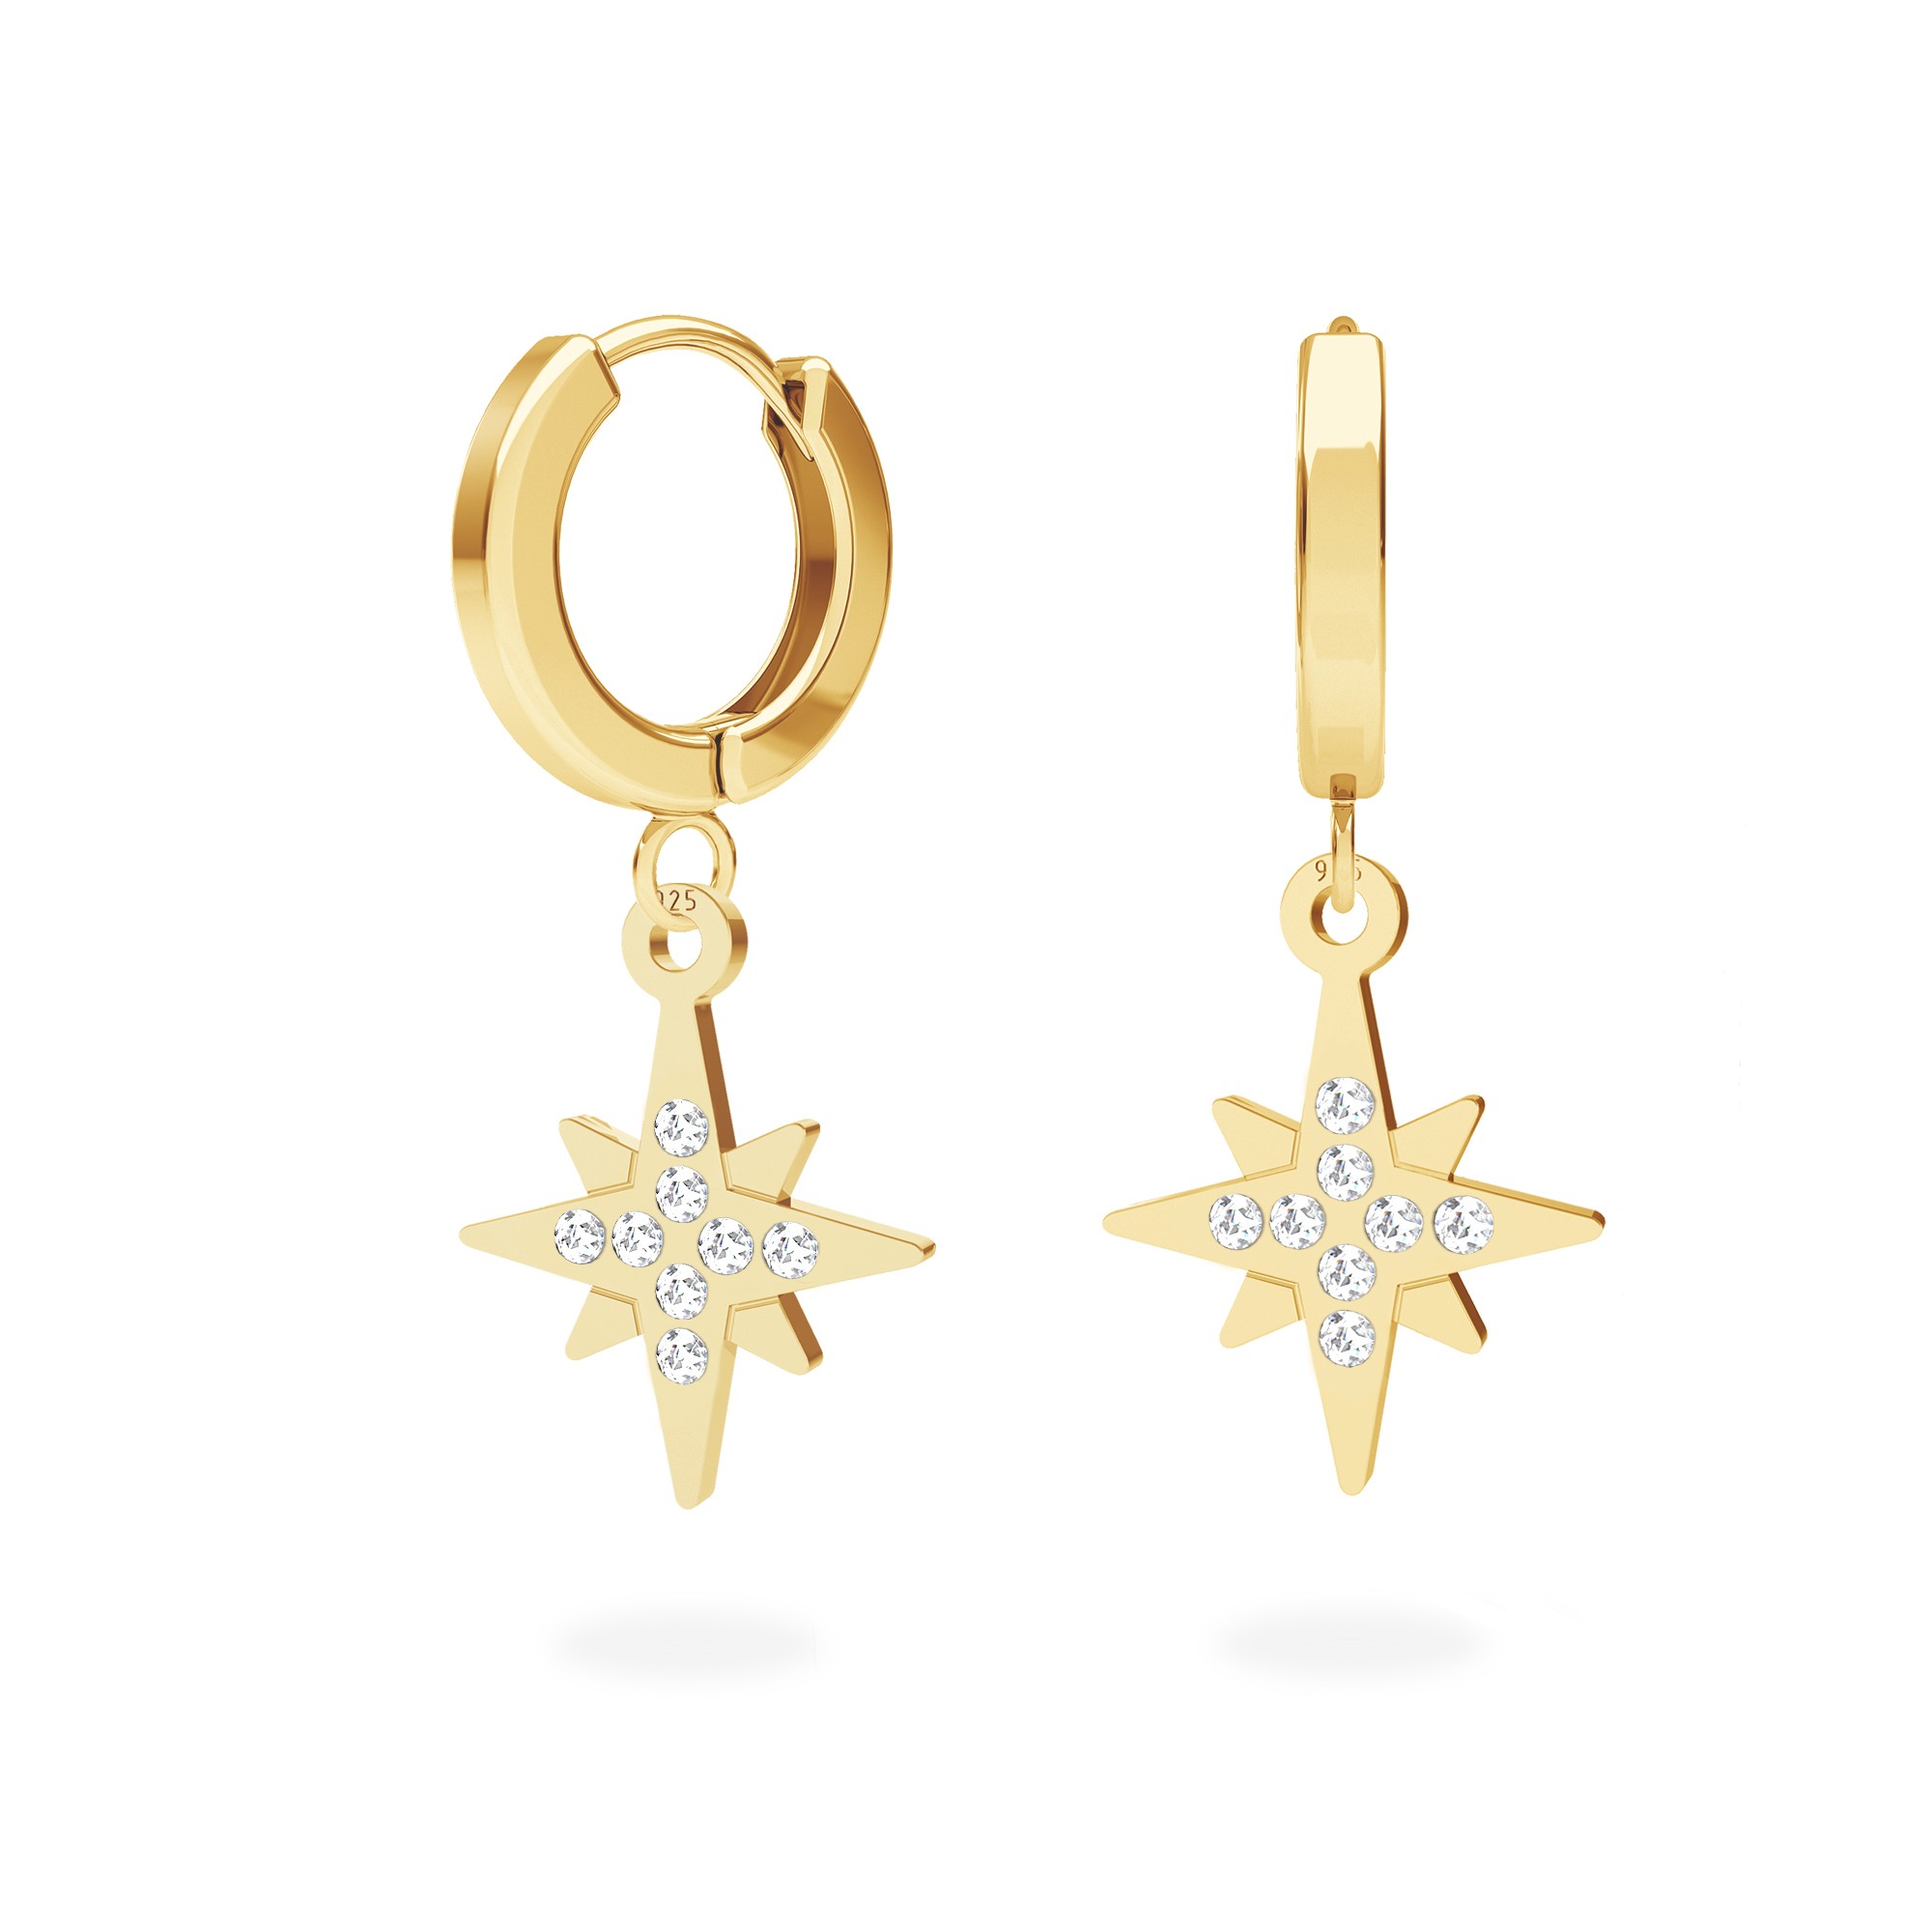 North star earrings sterling silver 925